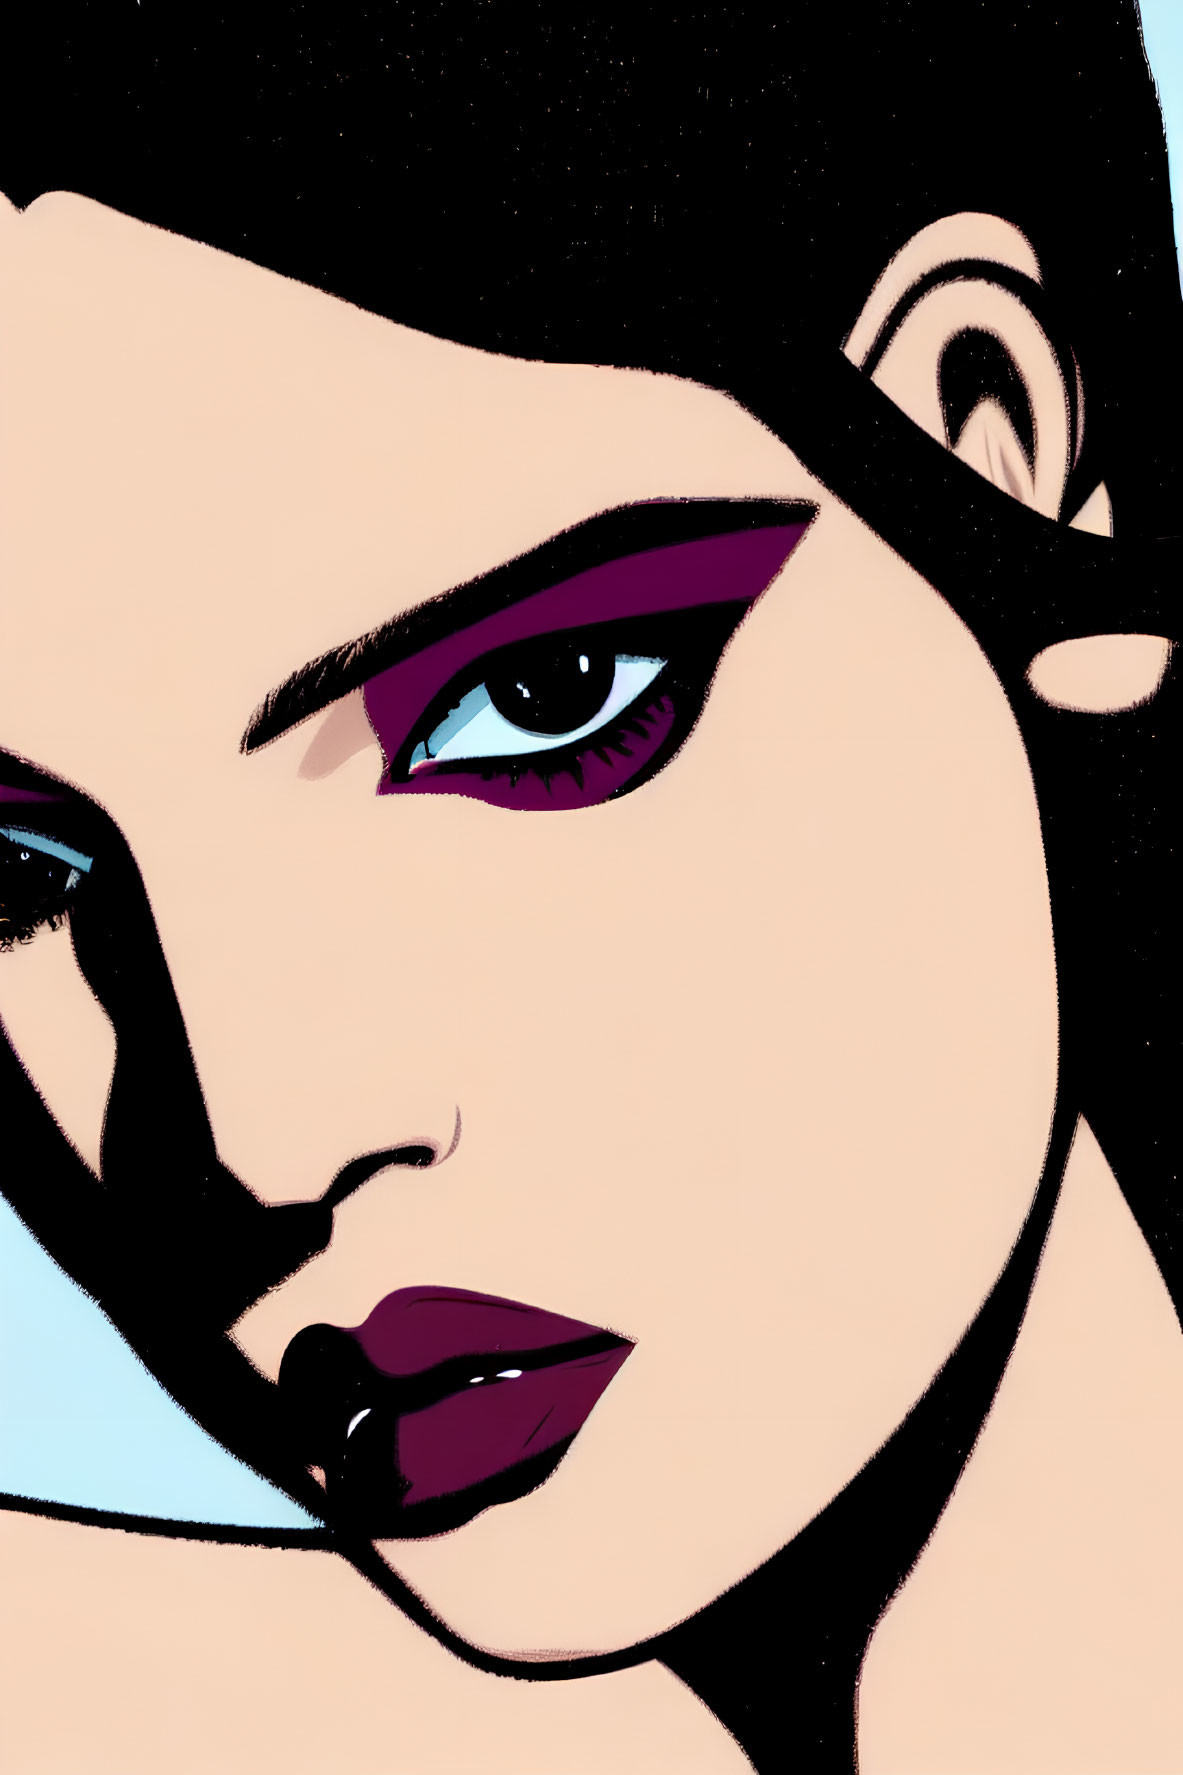 Bold Purple Eyeshadow Woman Illustration on Teal Background